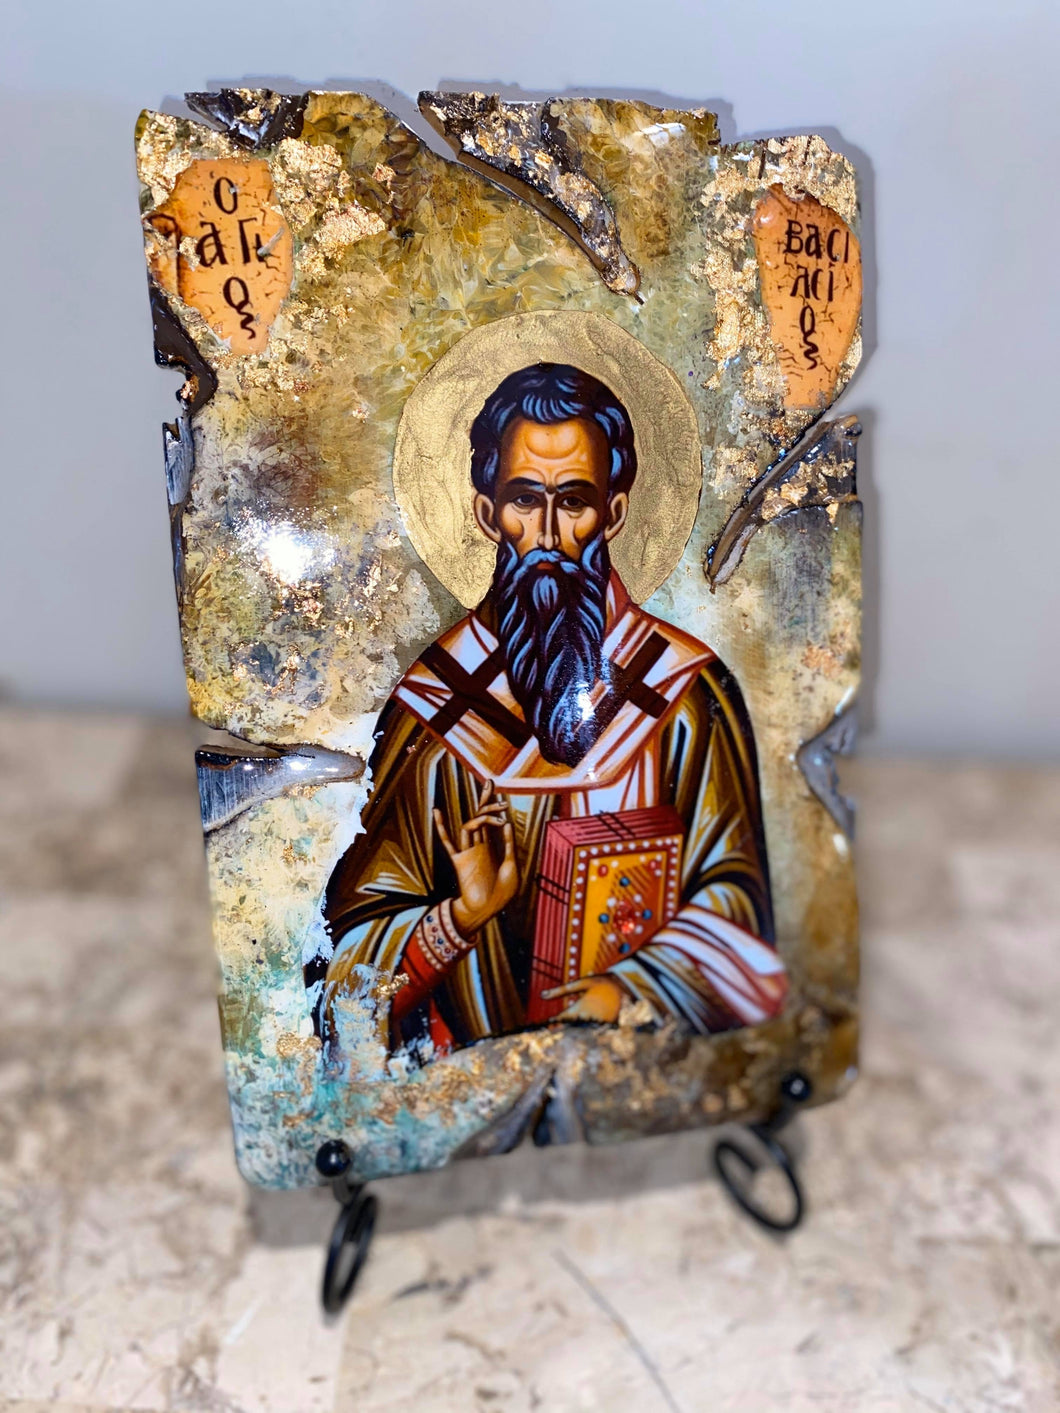 Saint Vasilios - religious wood epoxy resin handmade icon art - Only 1 off - Original